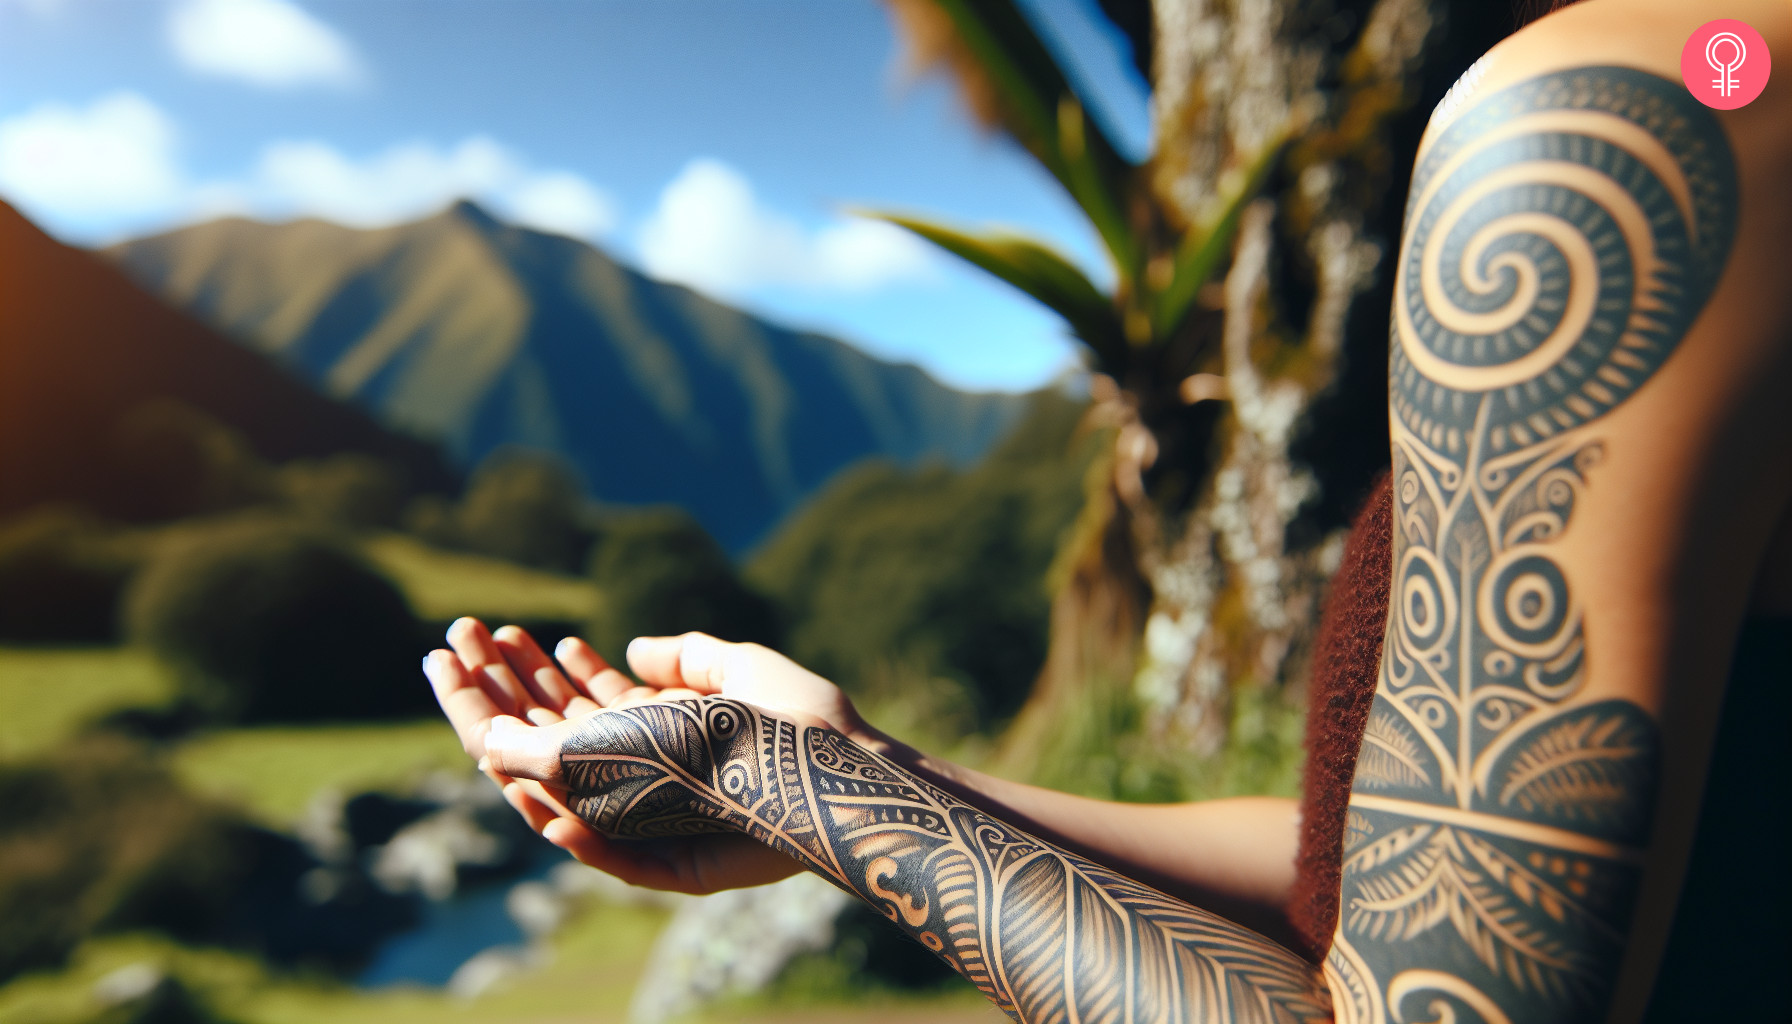 Leaf maori sleeve tattoo on a woman